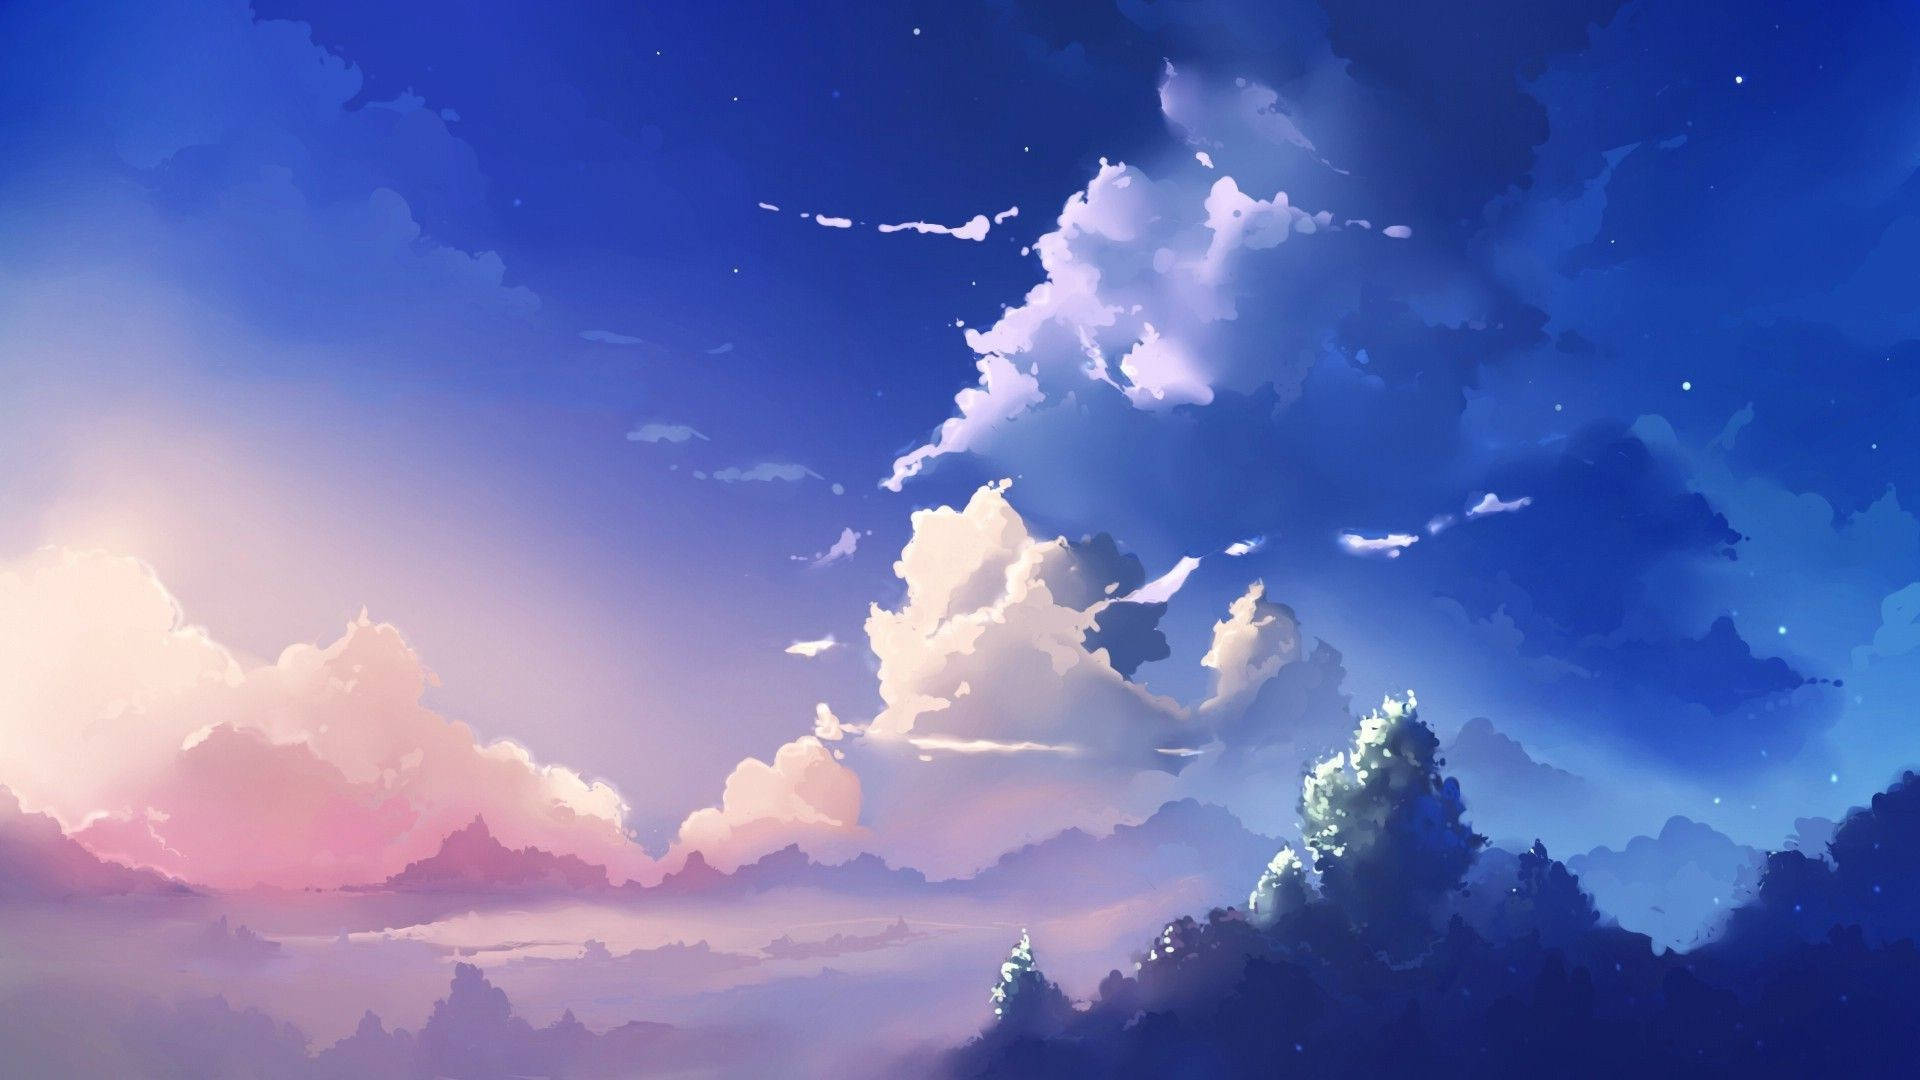 Dreamy Anime Cloud Artwork